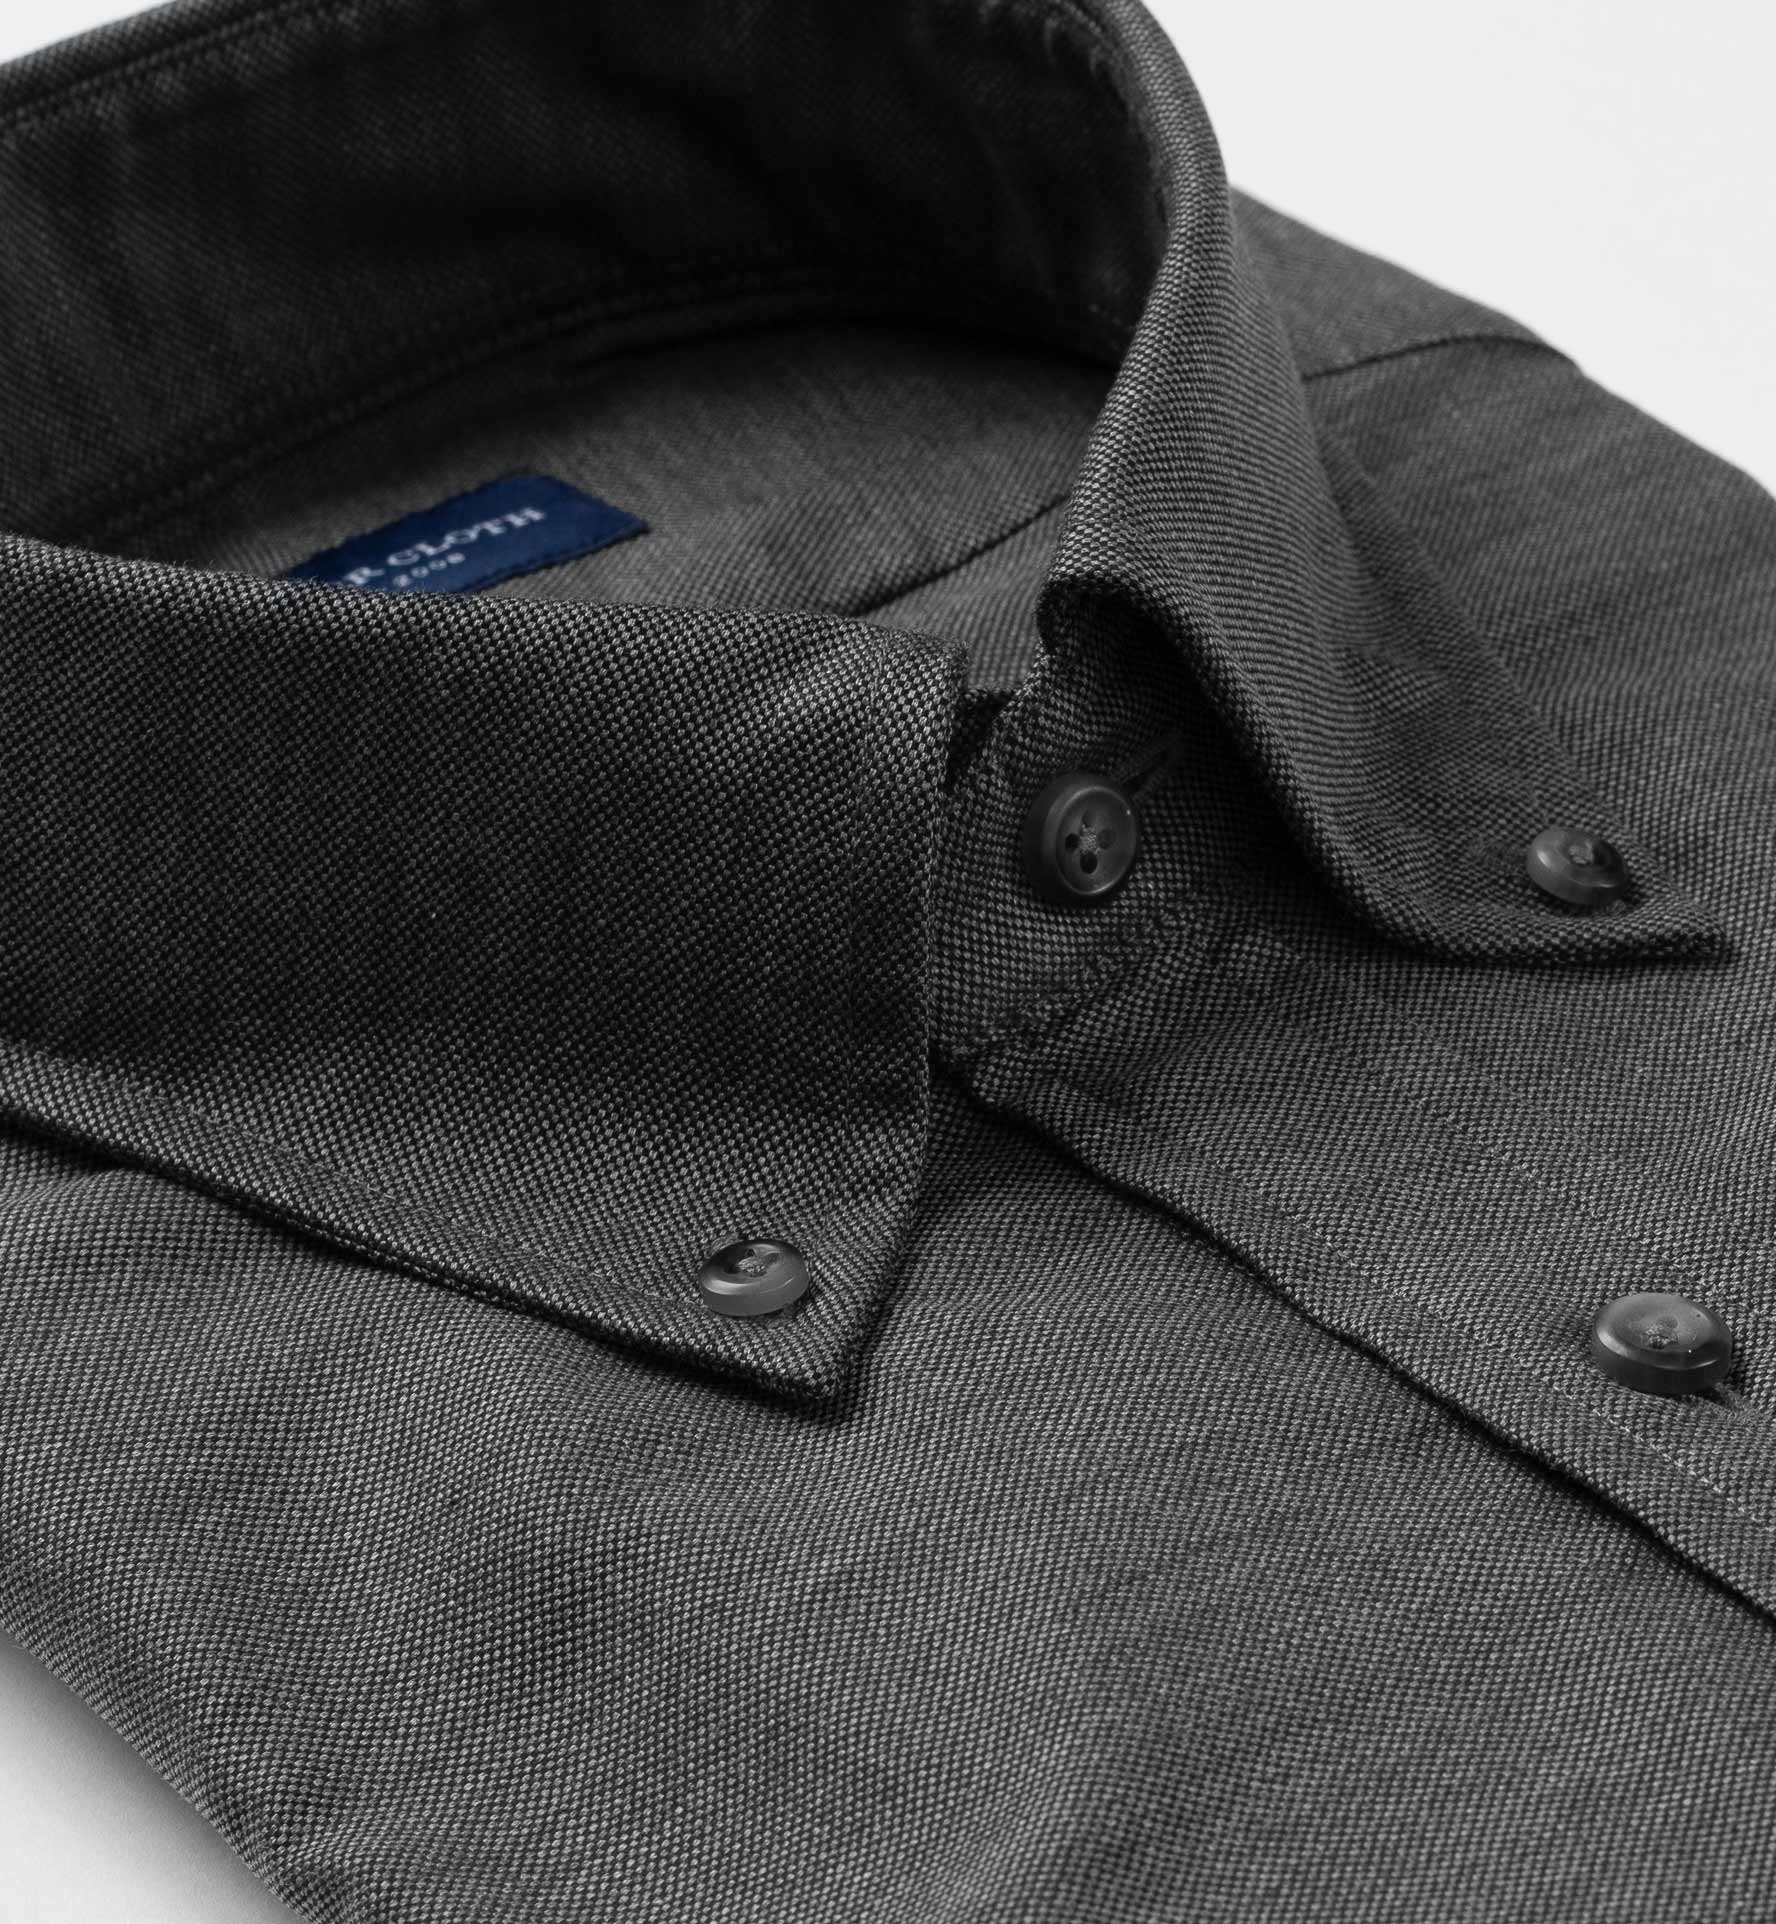 Charcoal Melange Oxford Custom Made Shirt by Proper Cloth